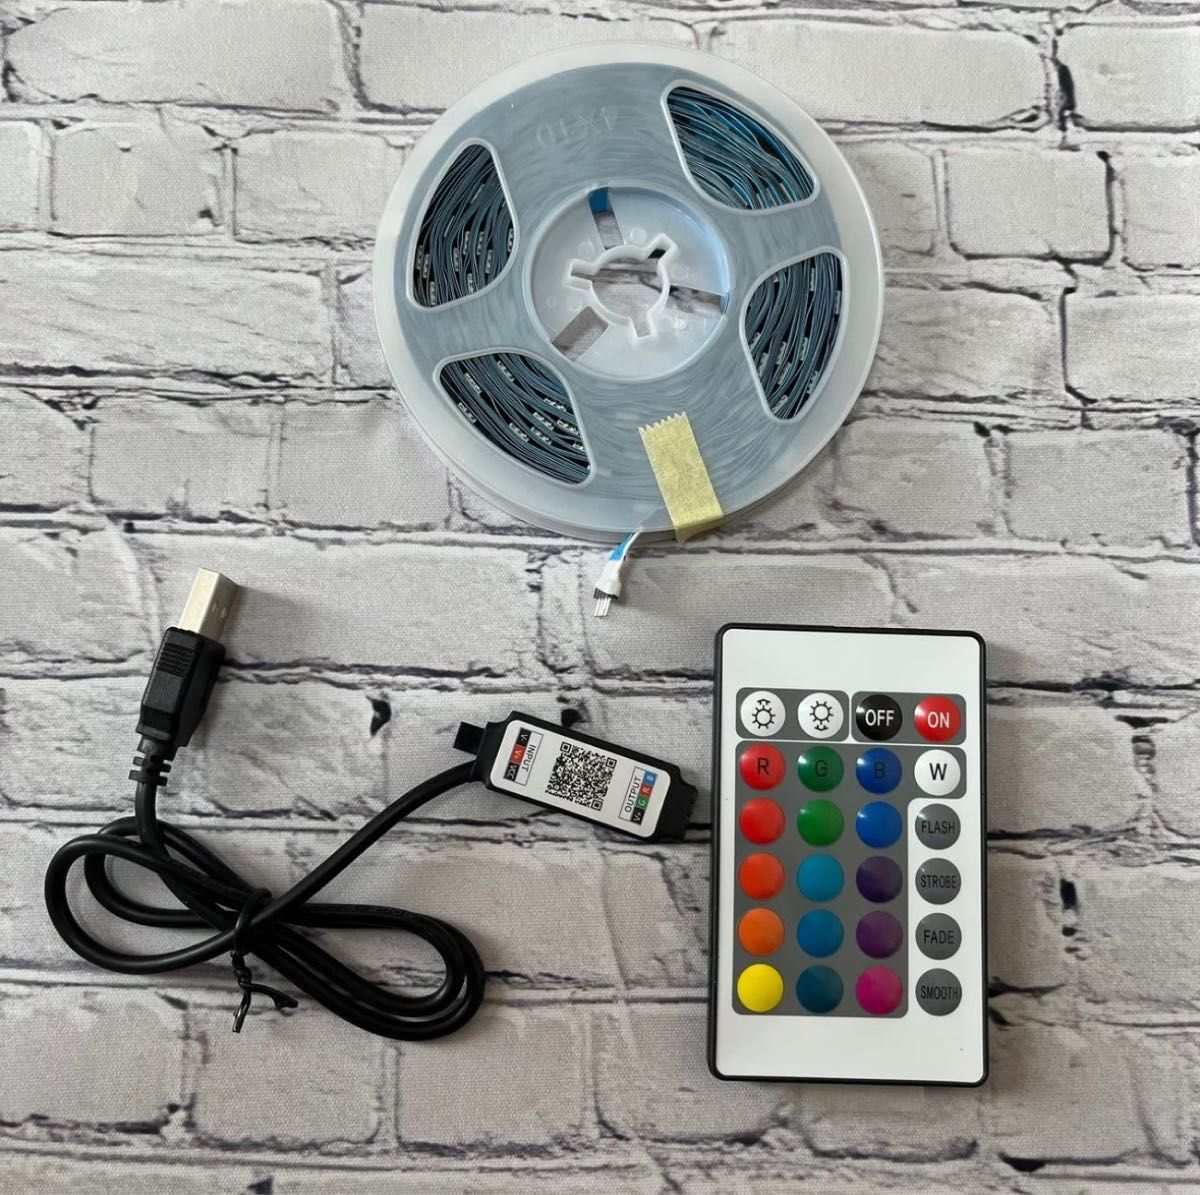 LED テープライト ライト 10m 照明 リモコン付き USB カット可 イルミネーション フットランプ 車内 装飾 インテリア